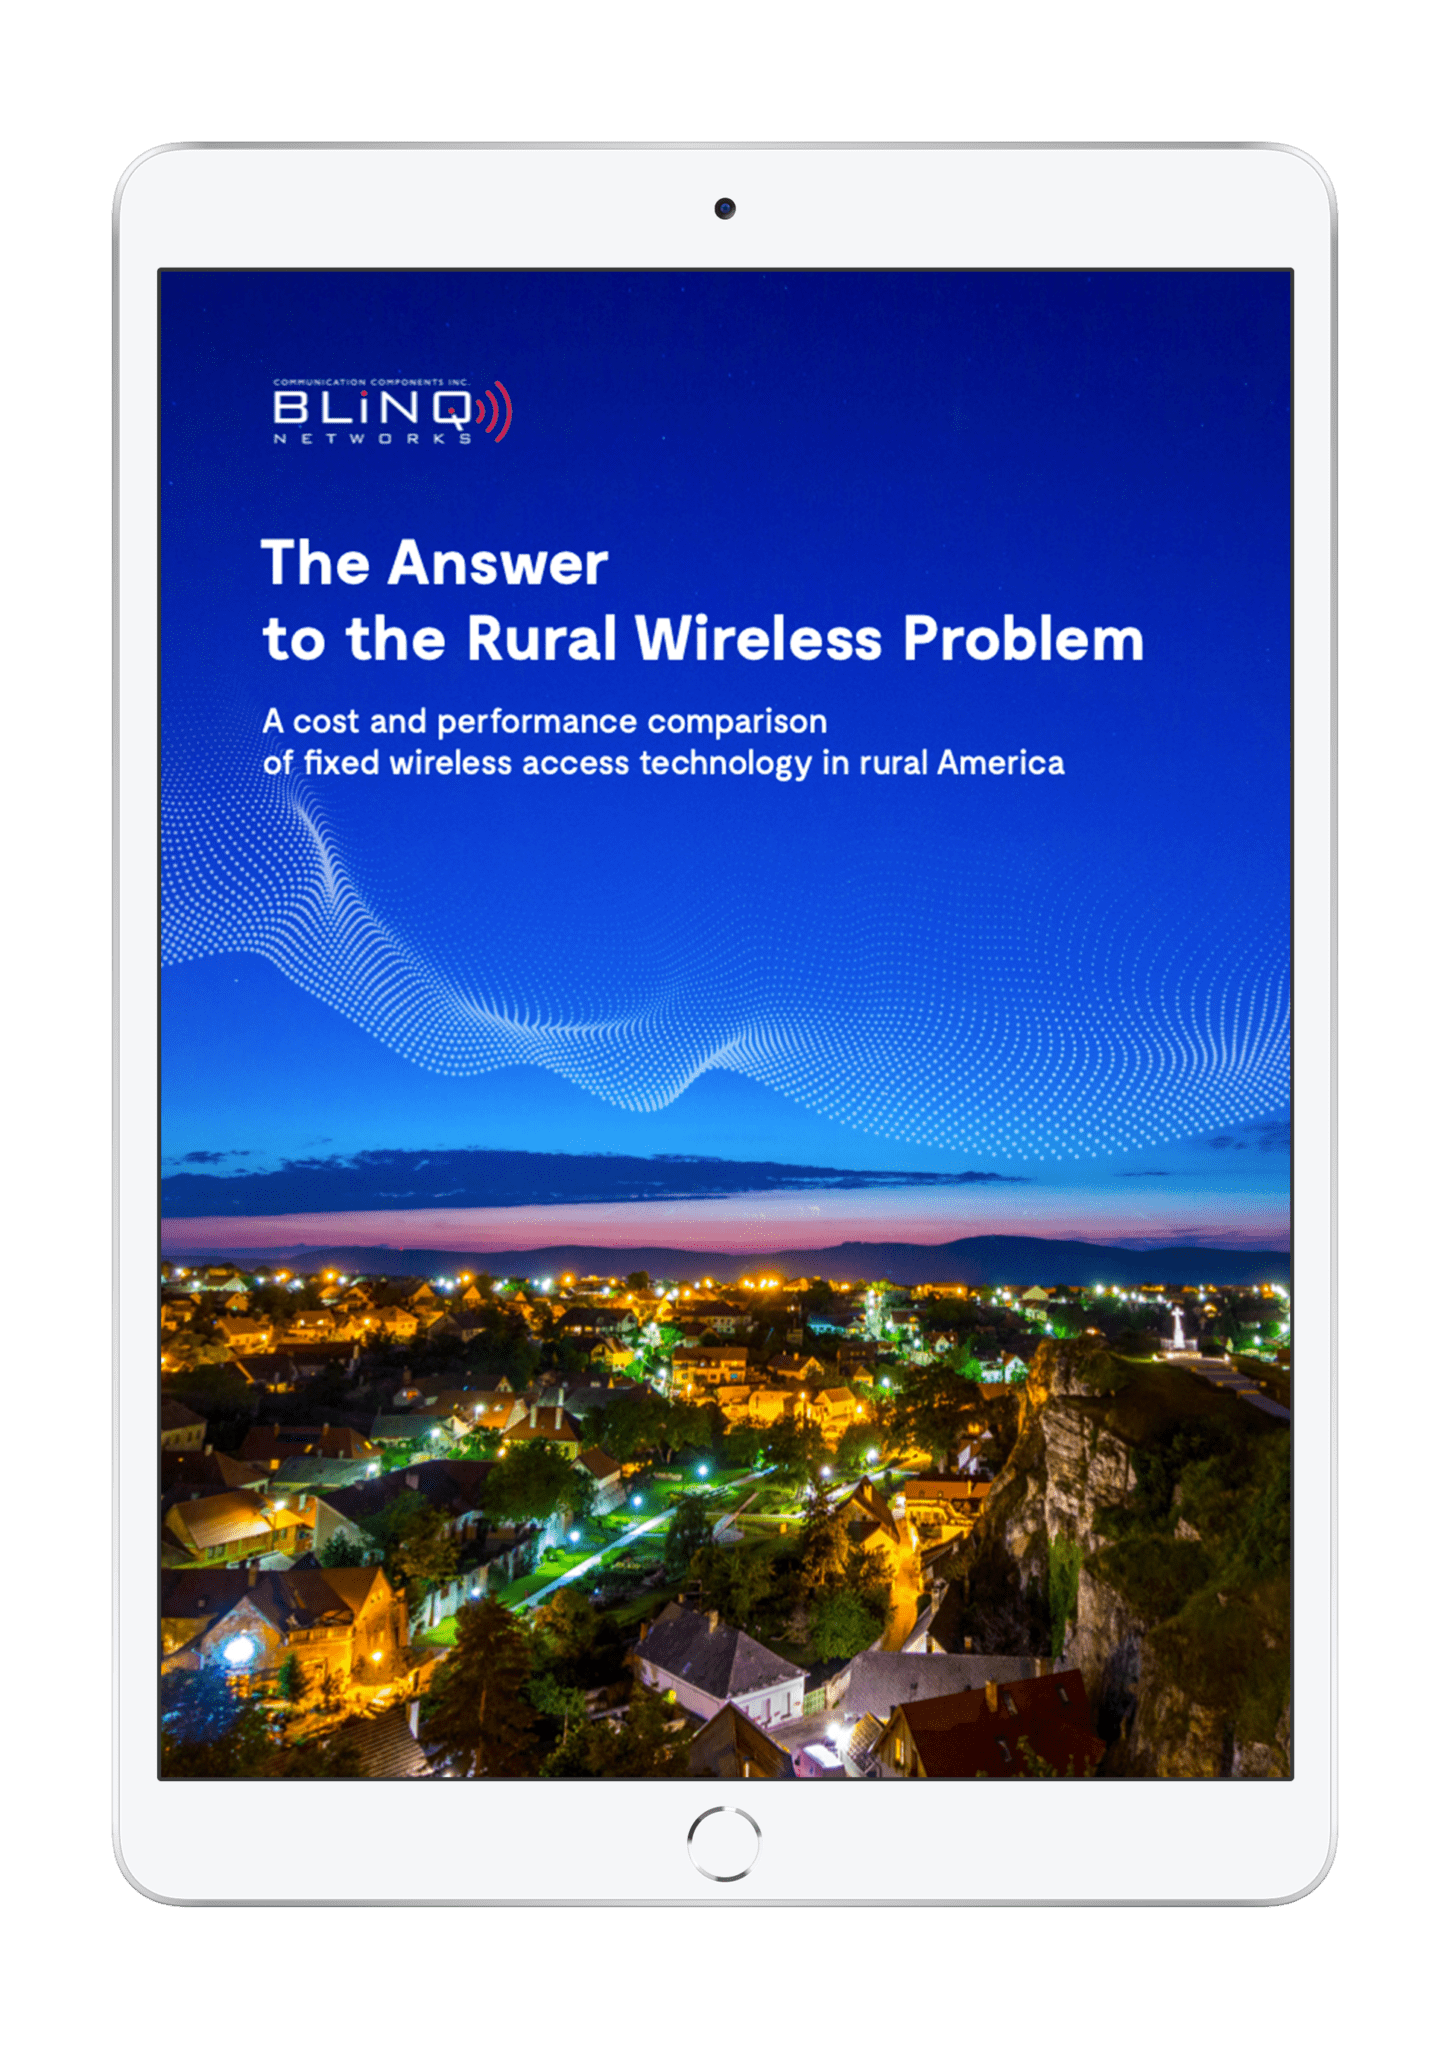 Bringing wireless connectivity to rural America: Case studies on rural wireless challenges